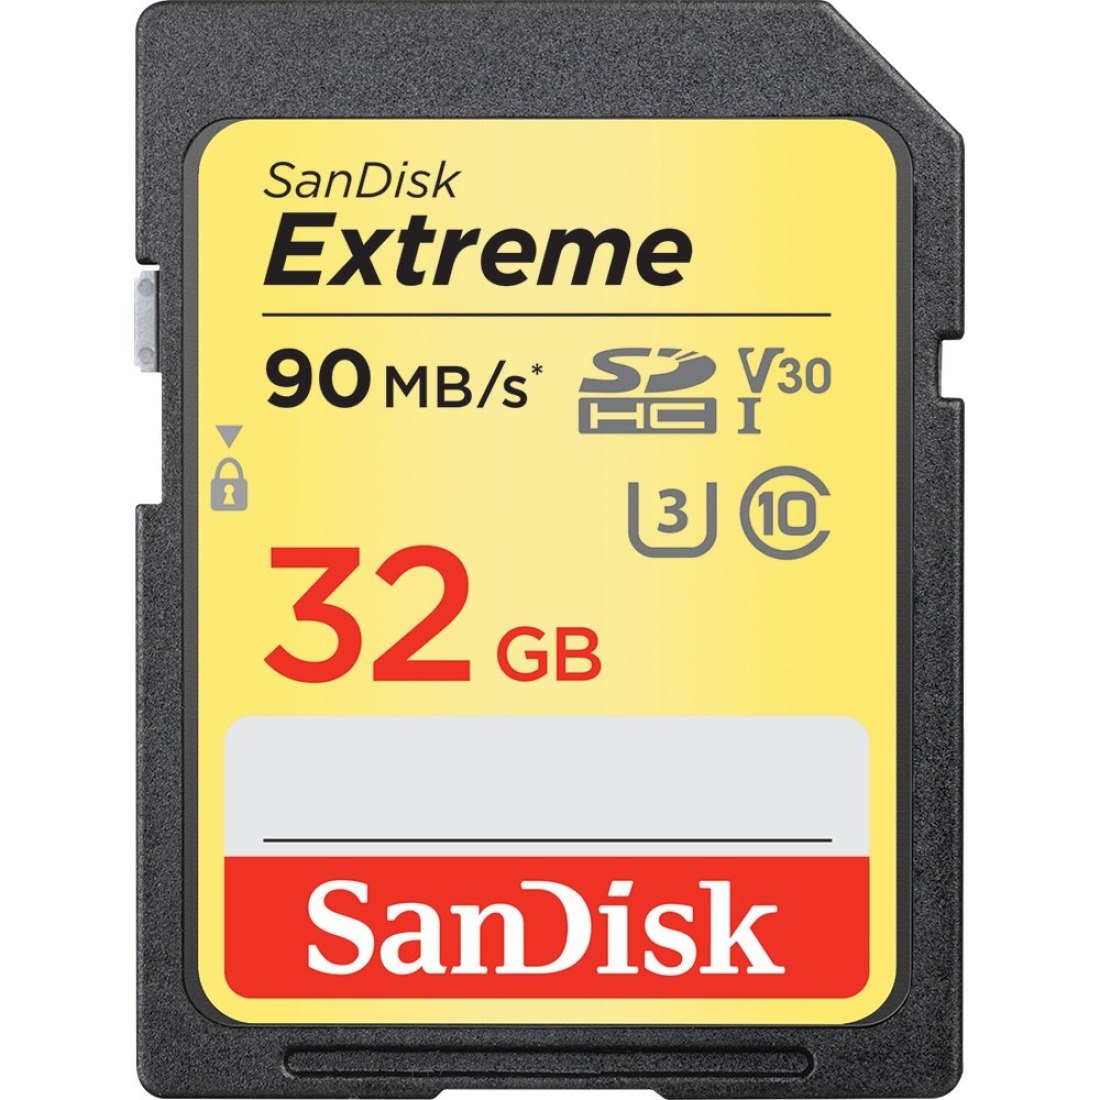 SanDisk Extreme 32 GB Class 10/UHS-I (U3) SDHC